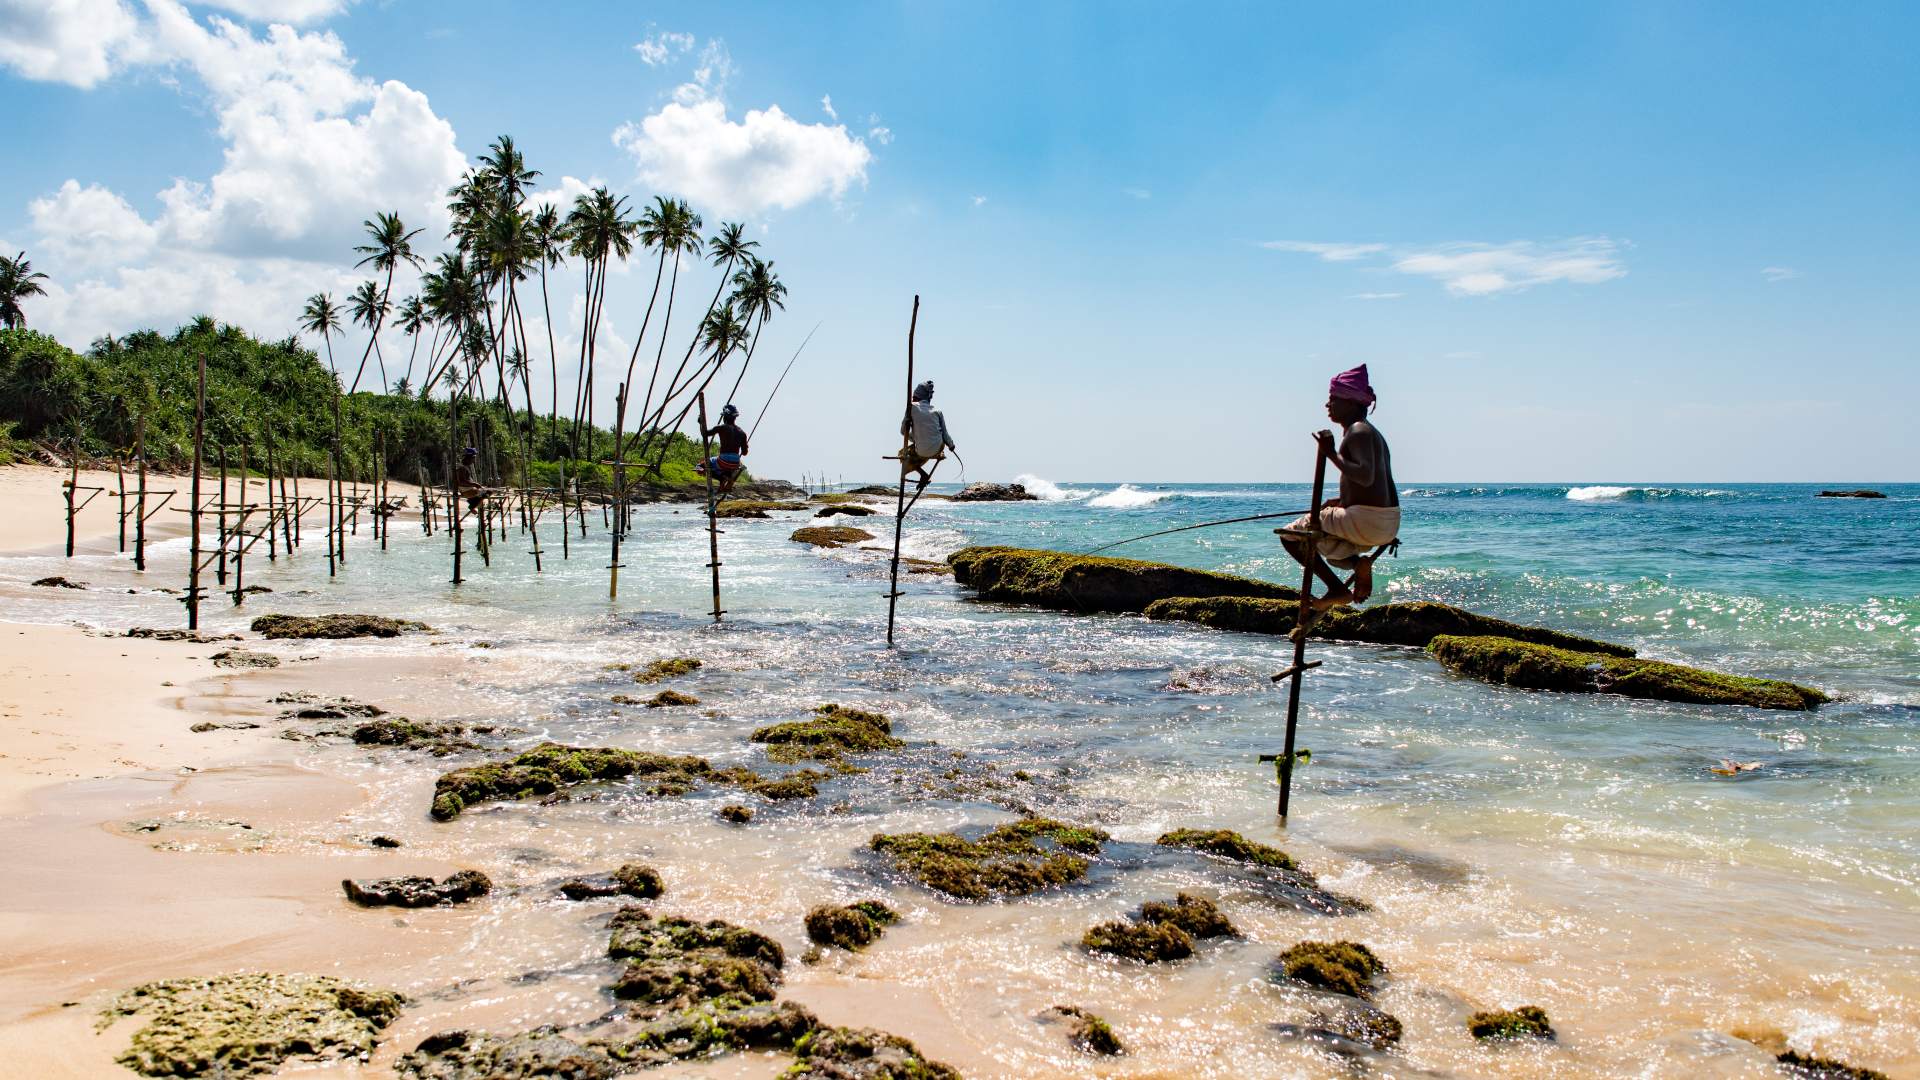 People on the beach in Sri Lanka